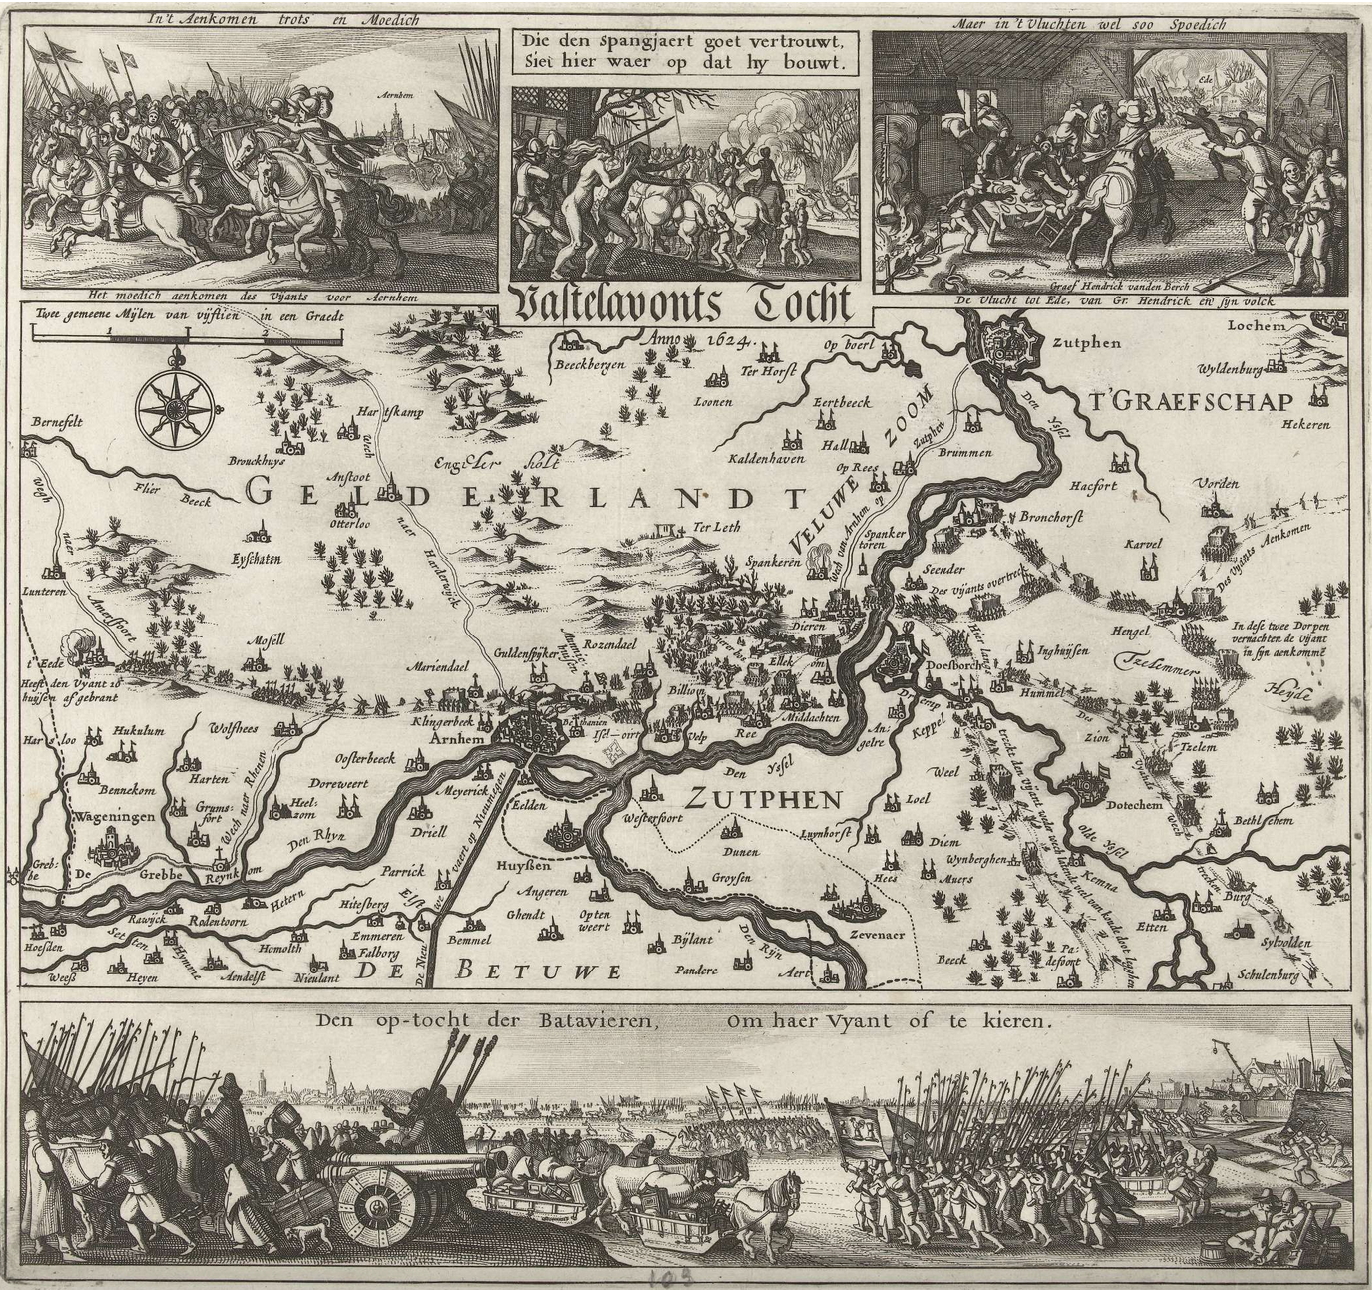 Bronkhorst in 1642